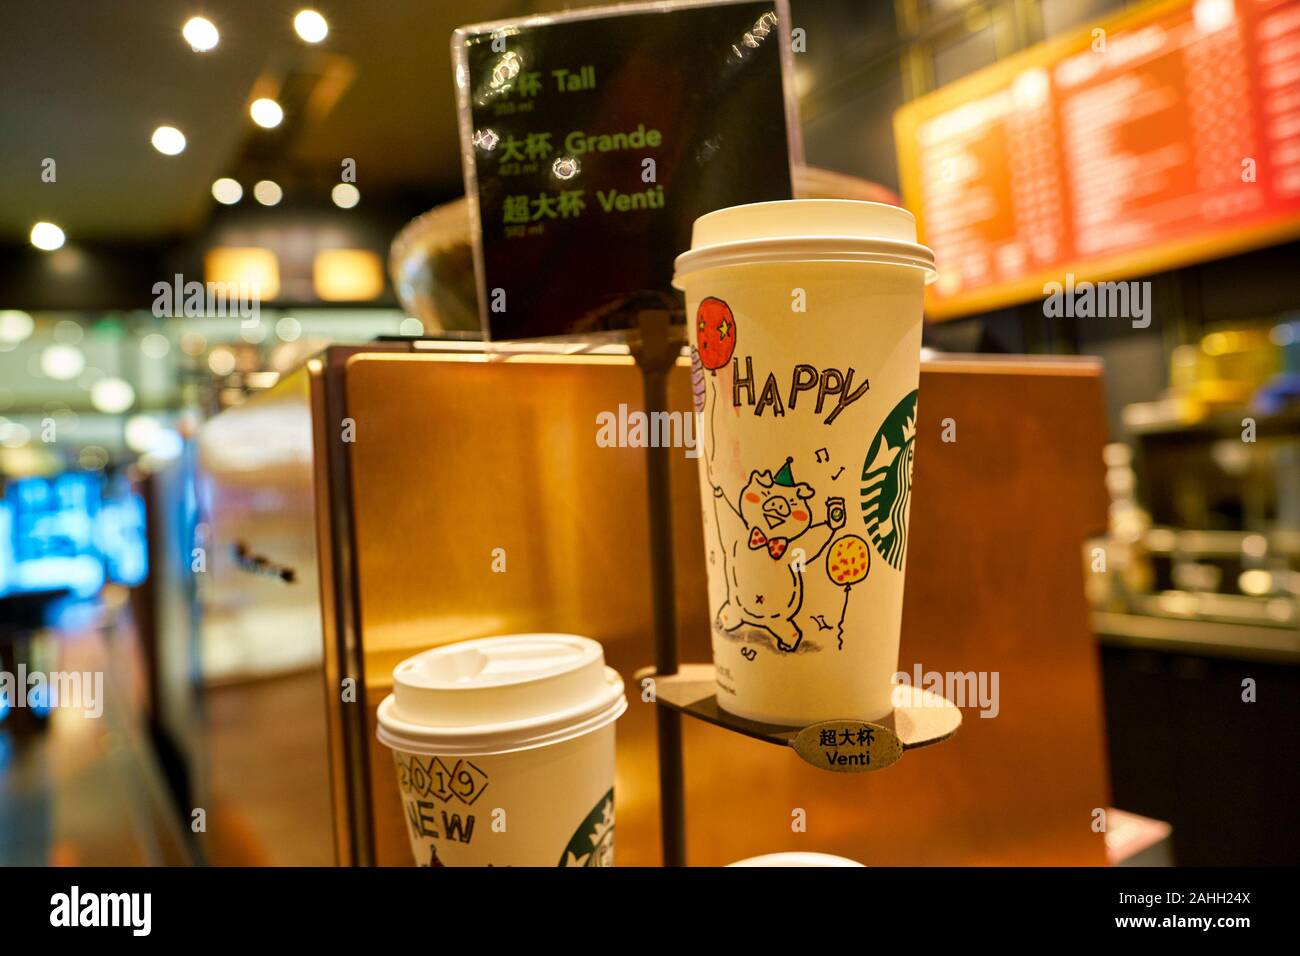 SHENZHEN, China - CIRCA Febrero, 2019: vasos de papel en la pantalla en el Starbucks en Shenzhen. Foto de stock